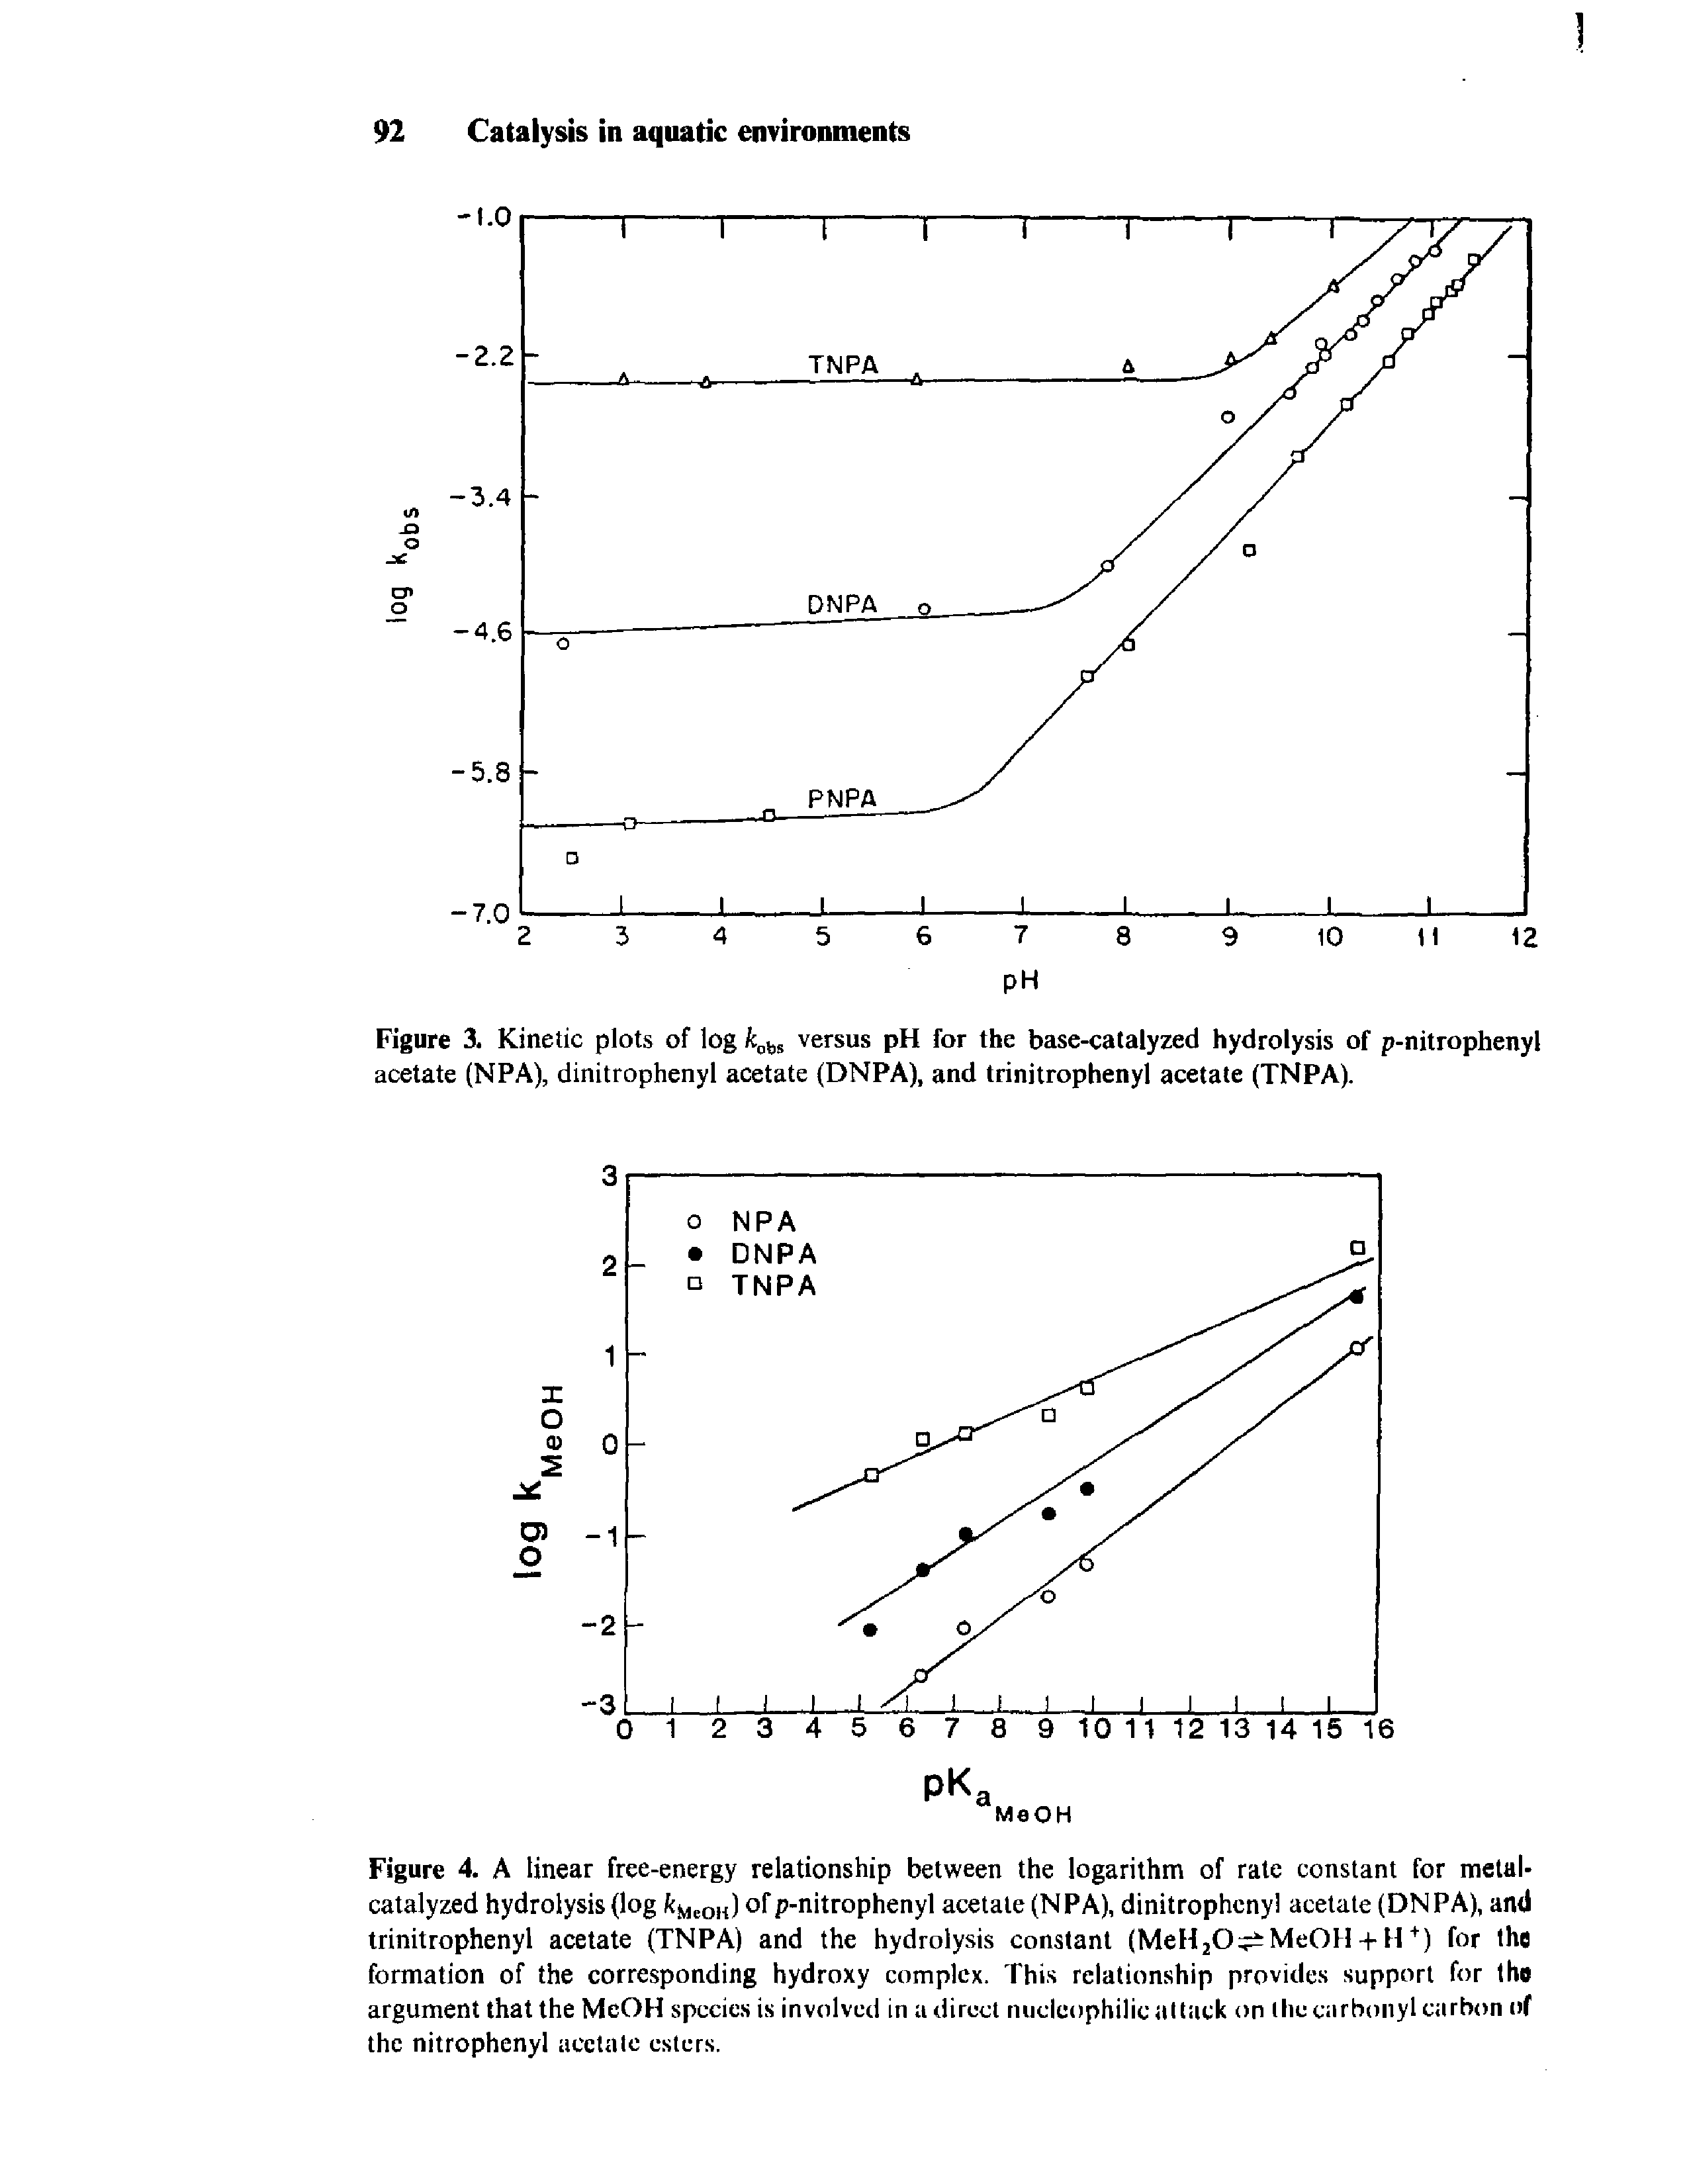 Figure 3. Kinetic plots of log kohs versus pH for the base-catalyzed hydrolysis of p-nitrophenyl acetate (NPA), dinitrophenyl acetate (DNPA), and trinitrophenyl acetate (TNPA).